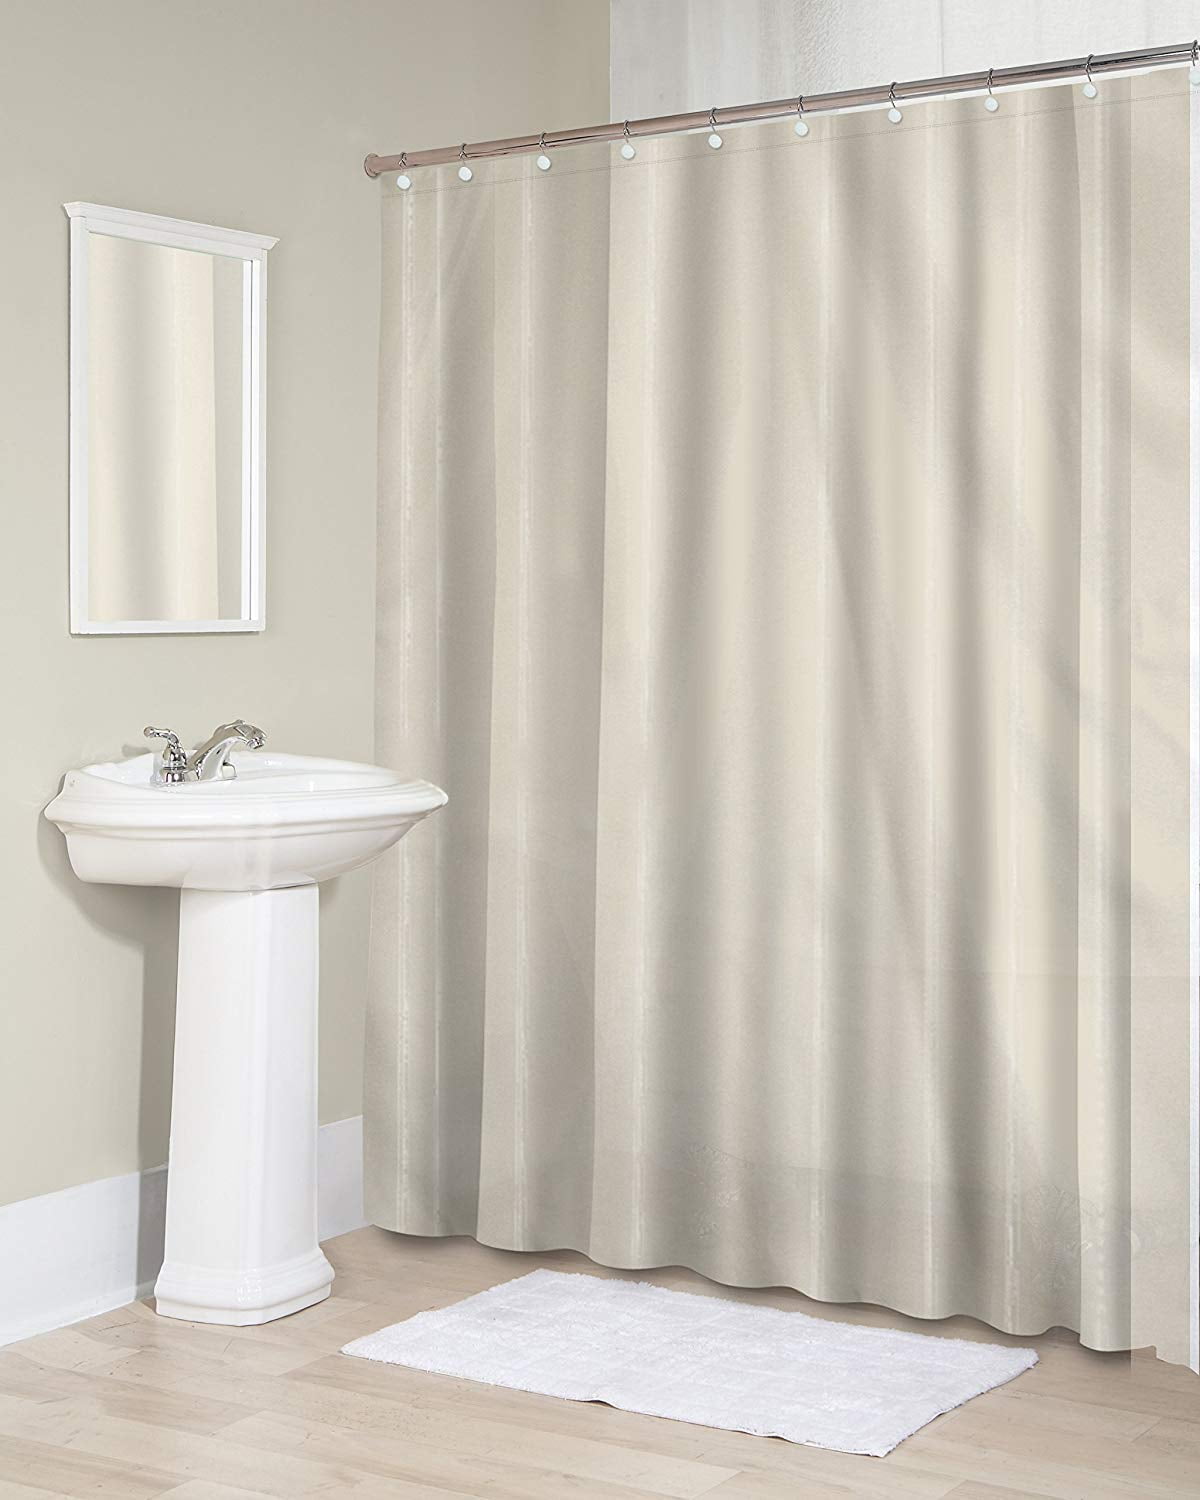 Waterproof Shower Curtain Bathroom Bath Fabric Decor Home Room Ring Hooks Large 